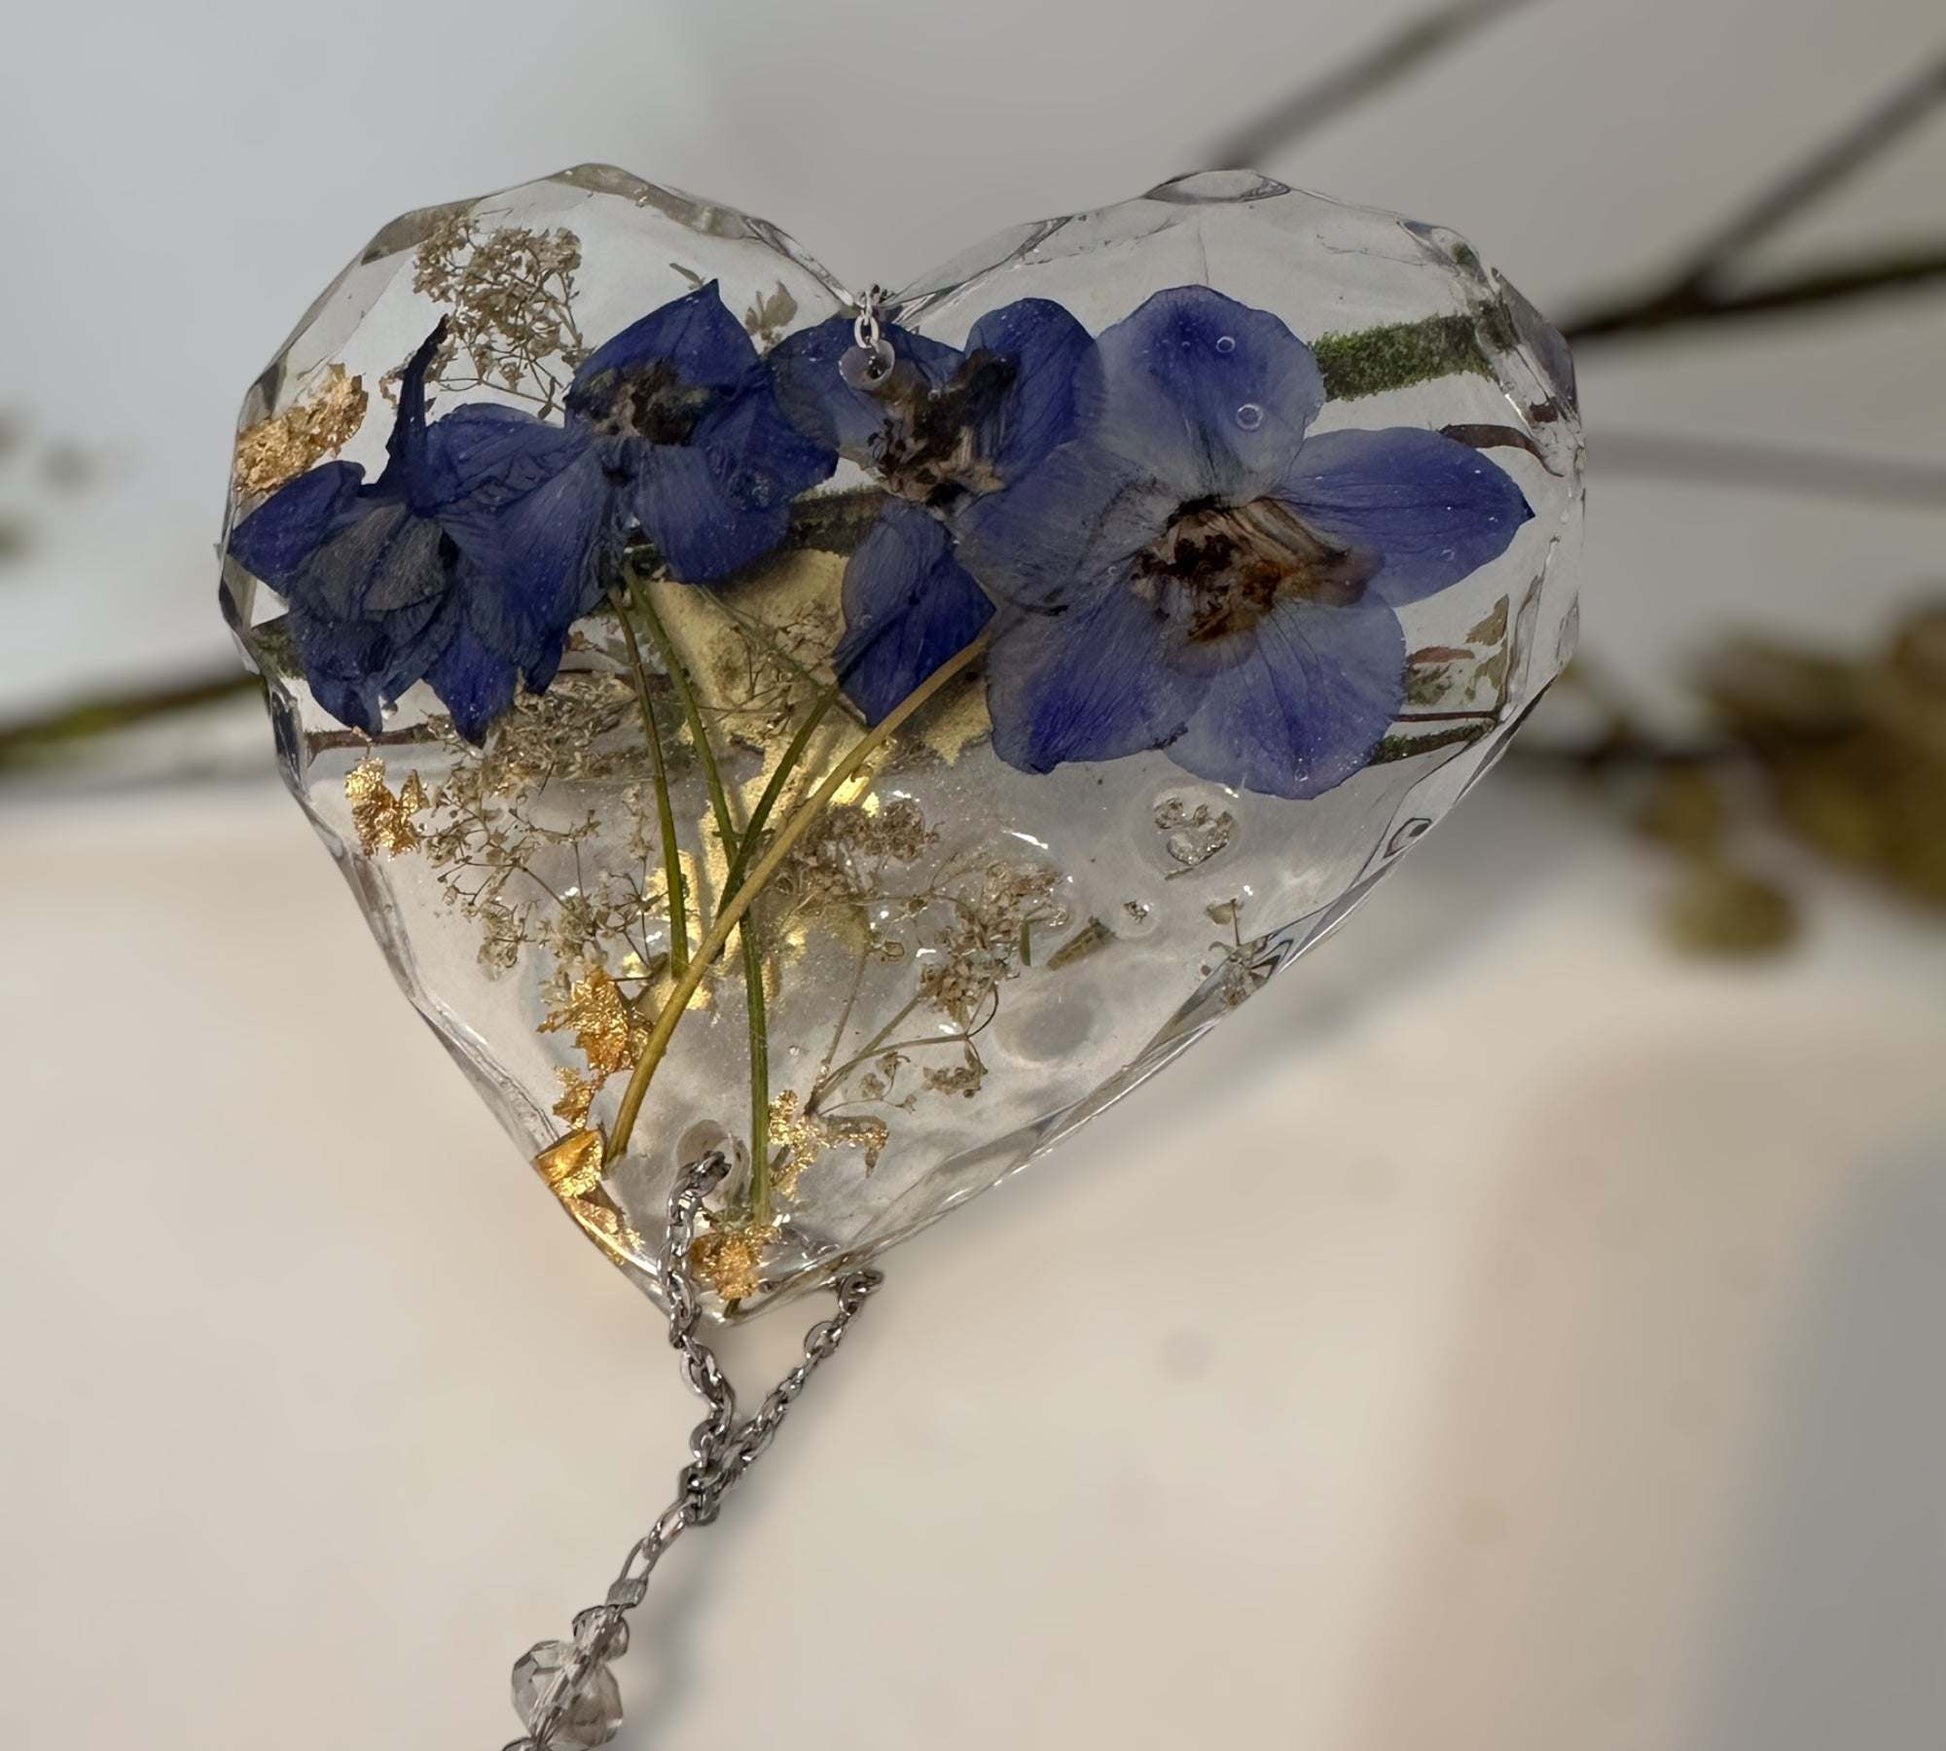 Floral Dreams Heart Suncatcher: Handcrafted Resin Pressed Flower Decor